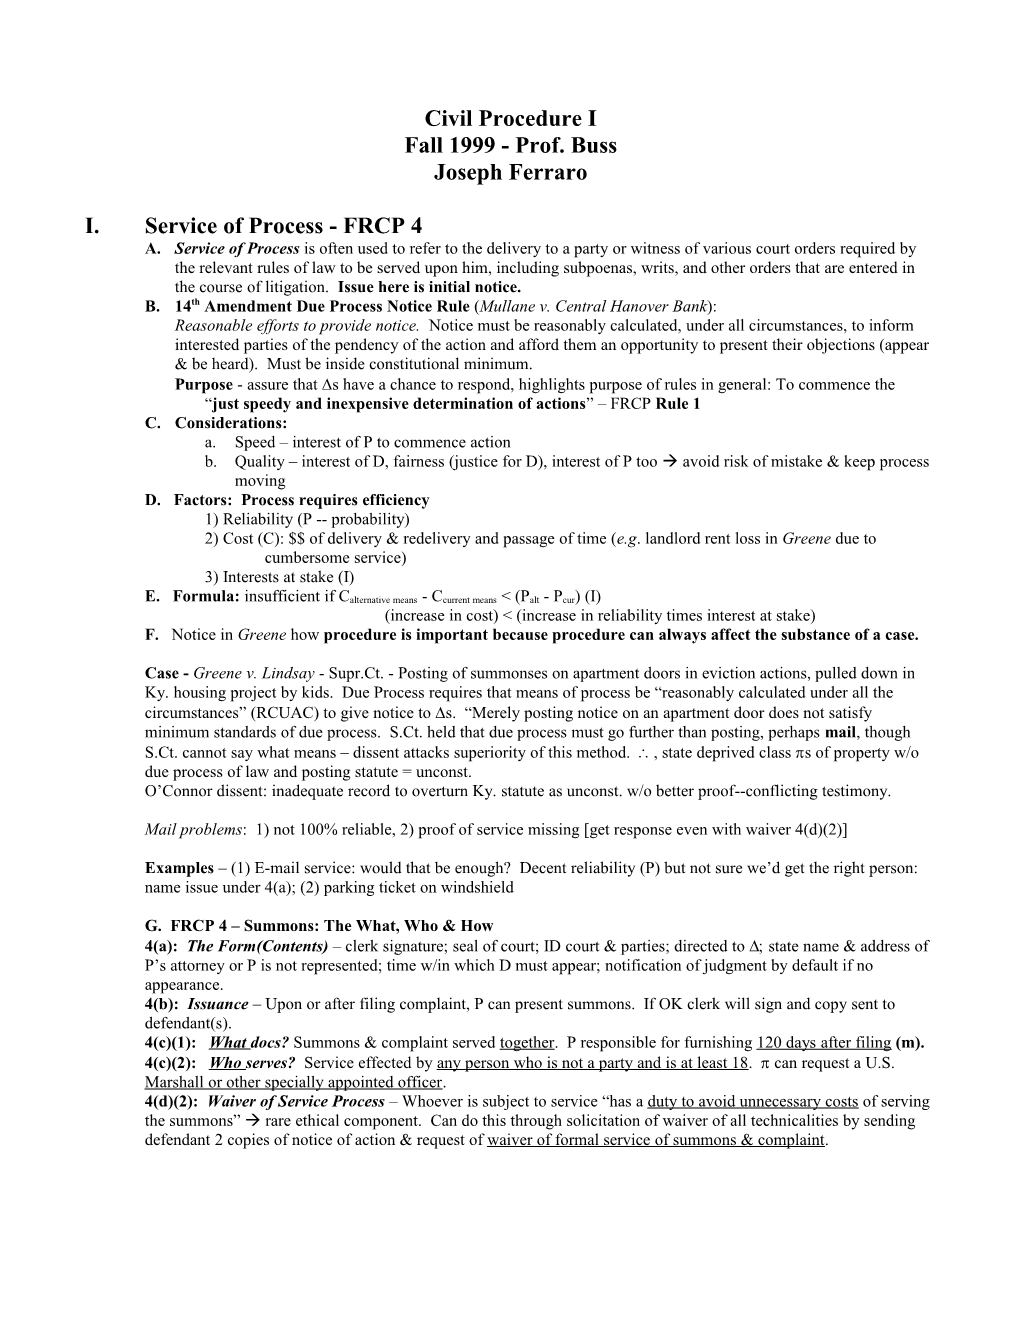 Civil Procedure I - Fall 1999 - Prof. Buss Joseph Ferraropage 1